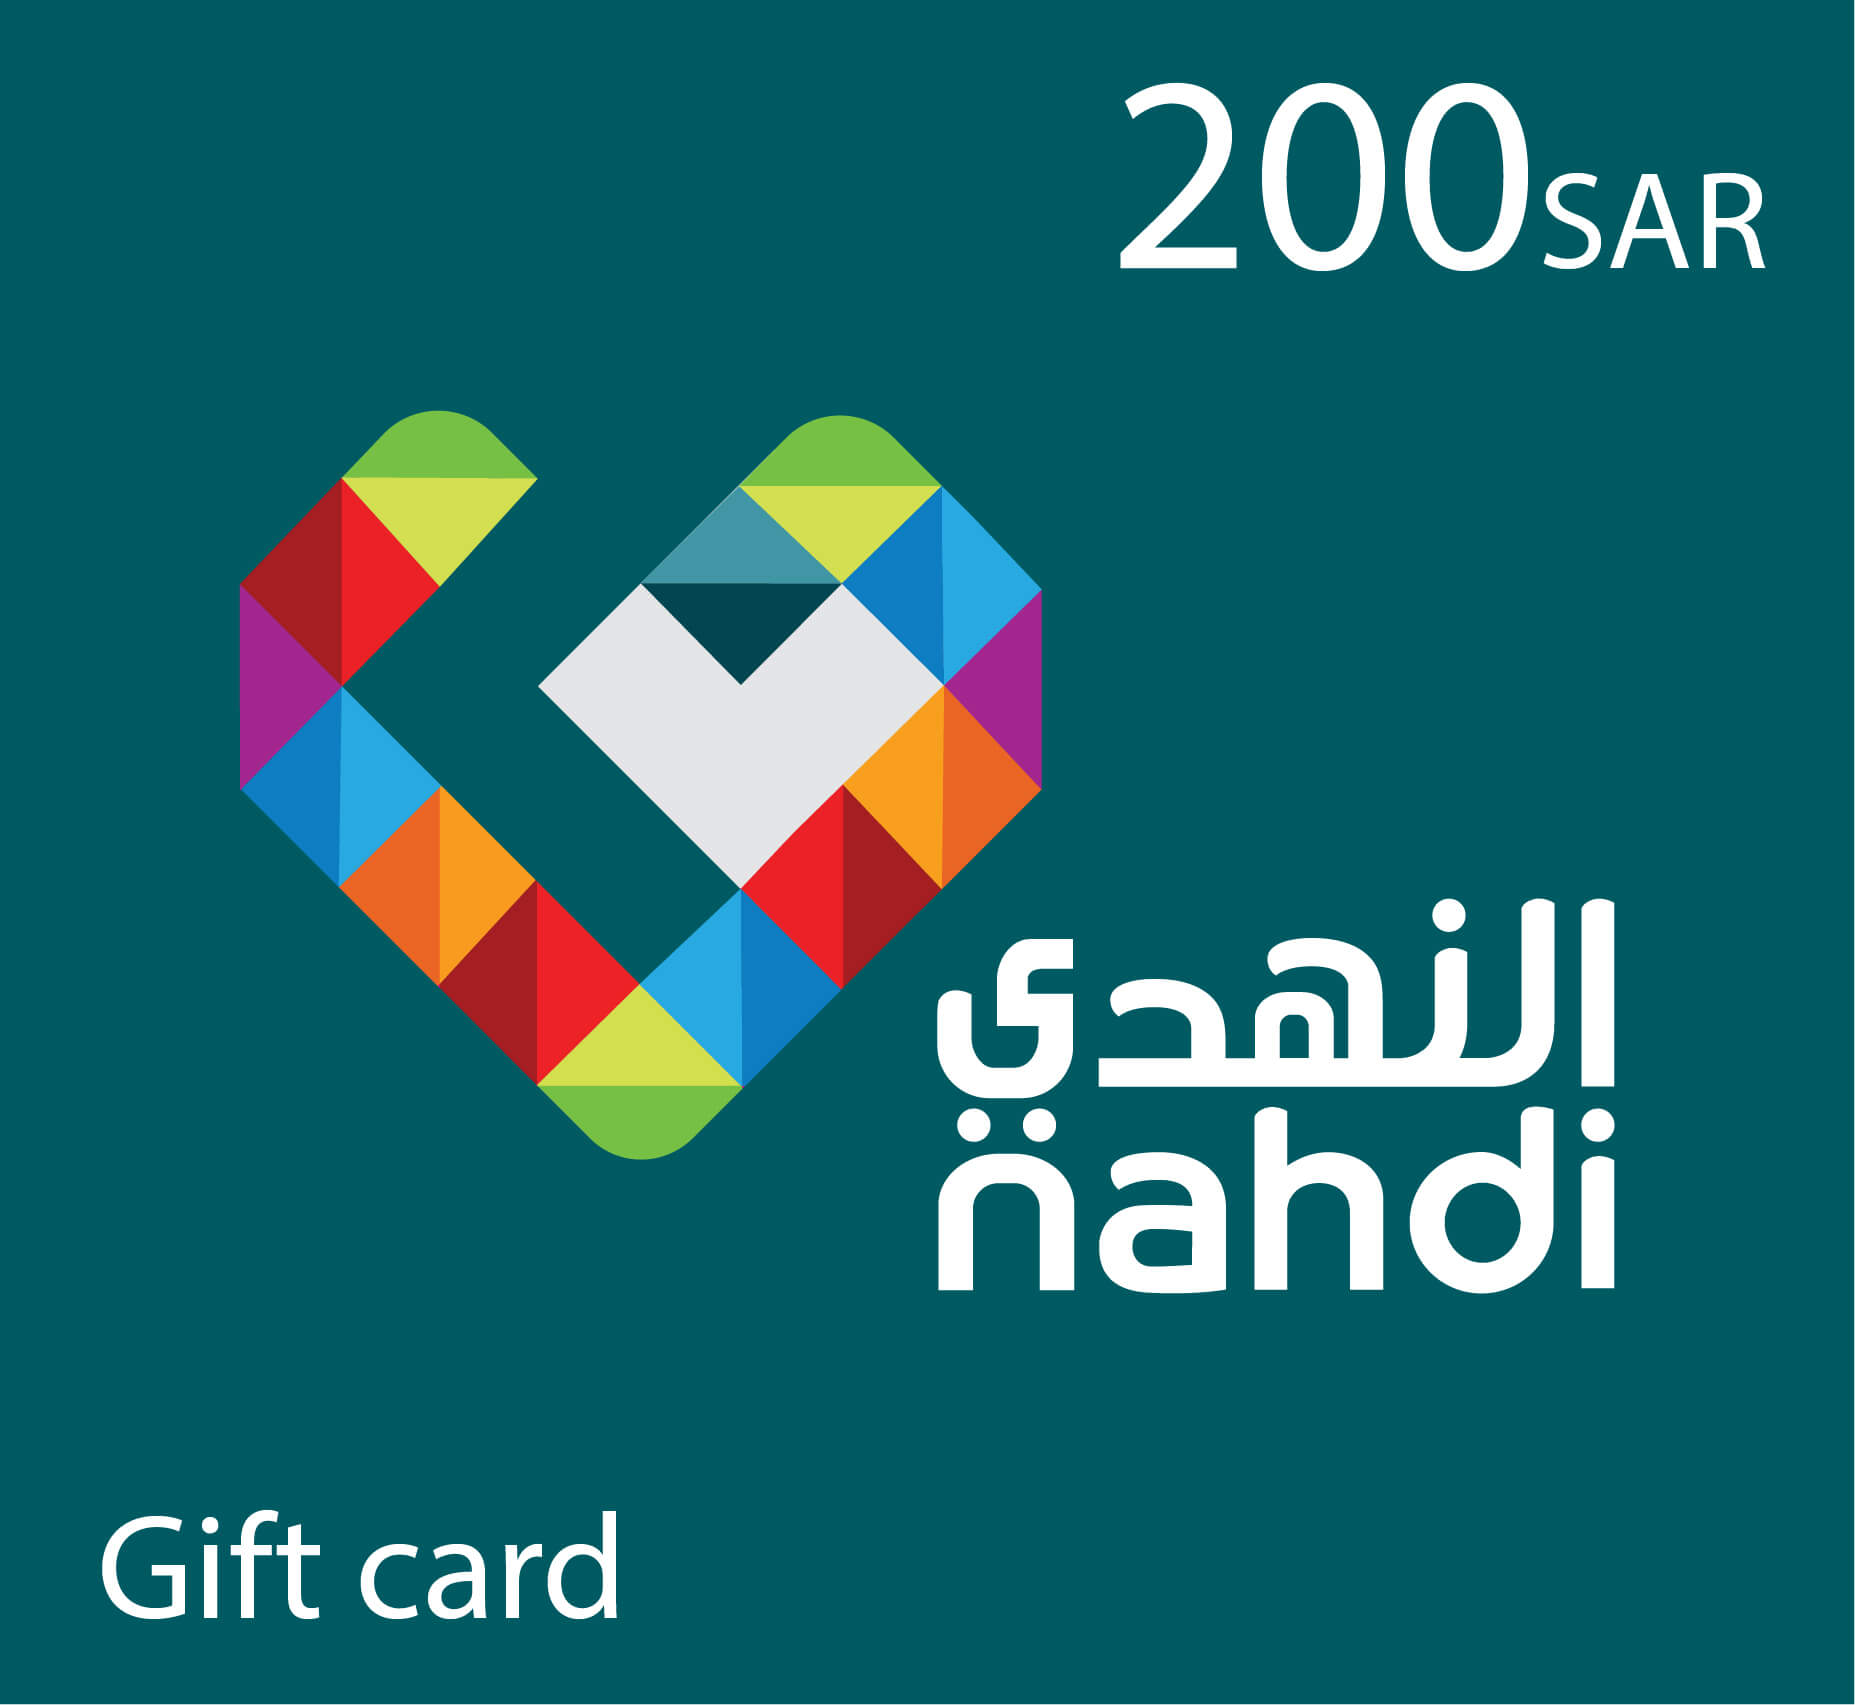 Nahdi Pharmacy Gift Card - 200 SAR